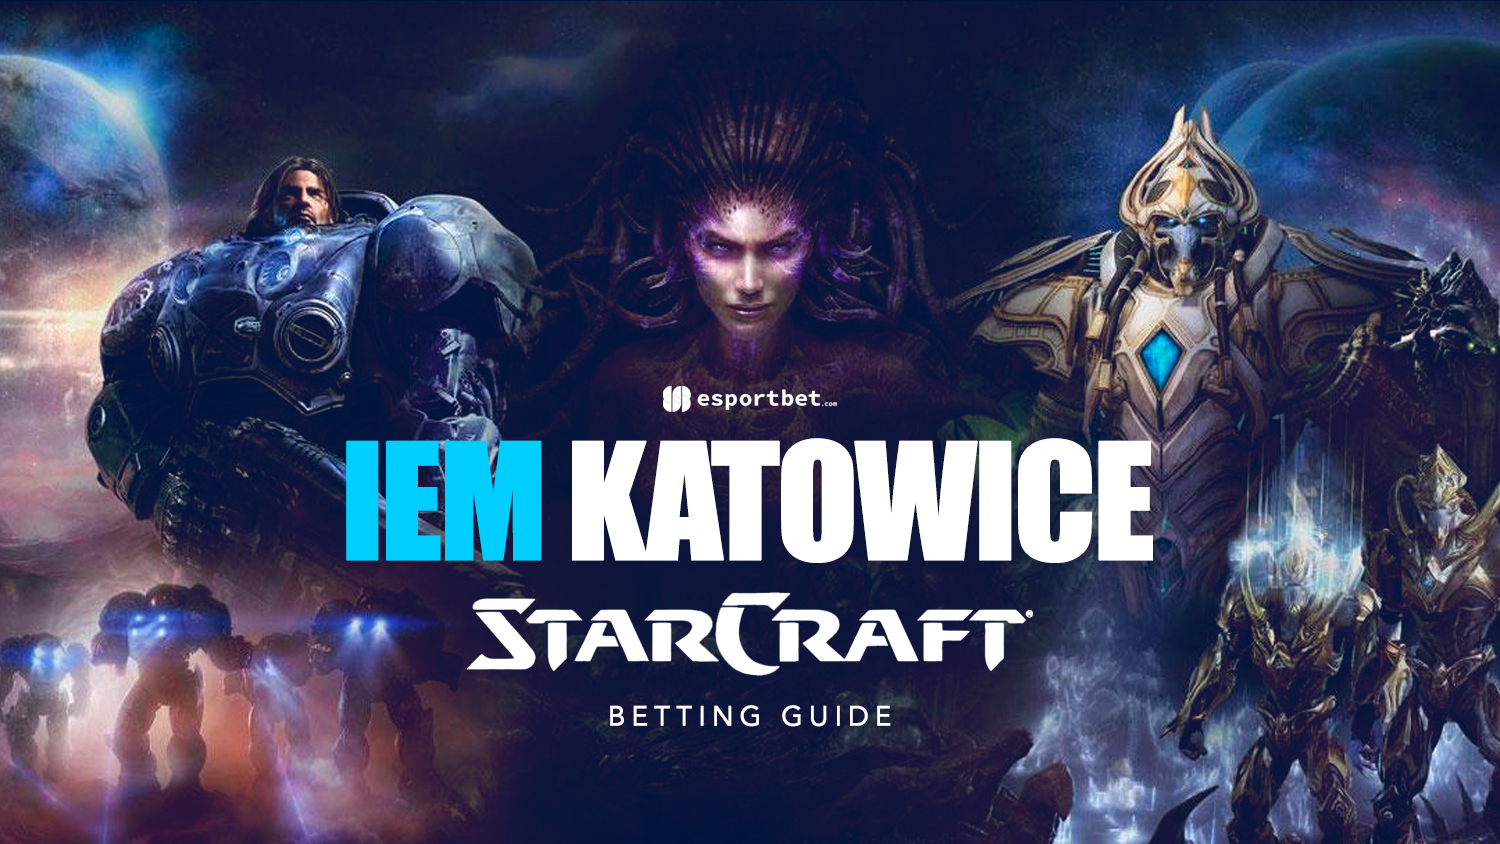 IEM Katowice StarCraft II Betting Guide